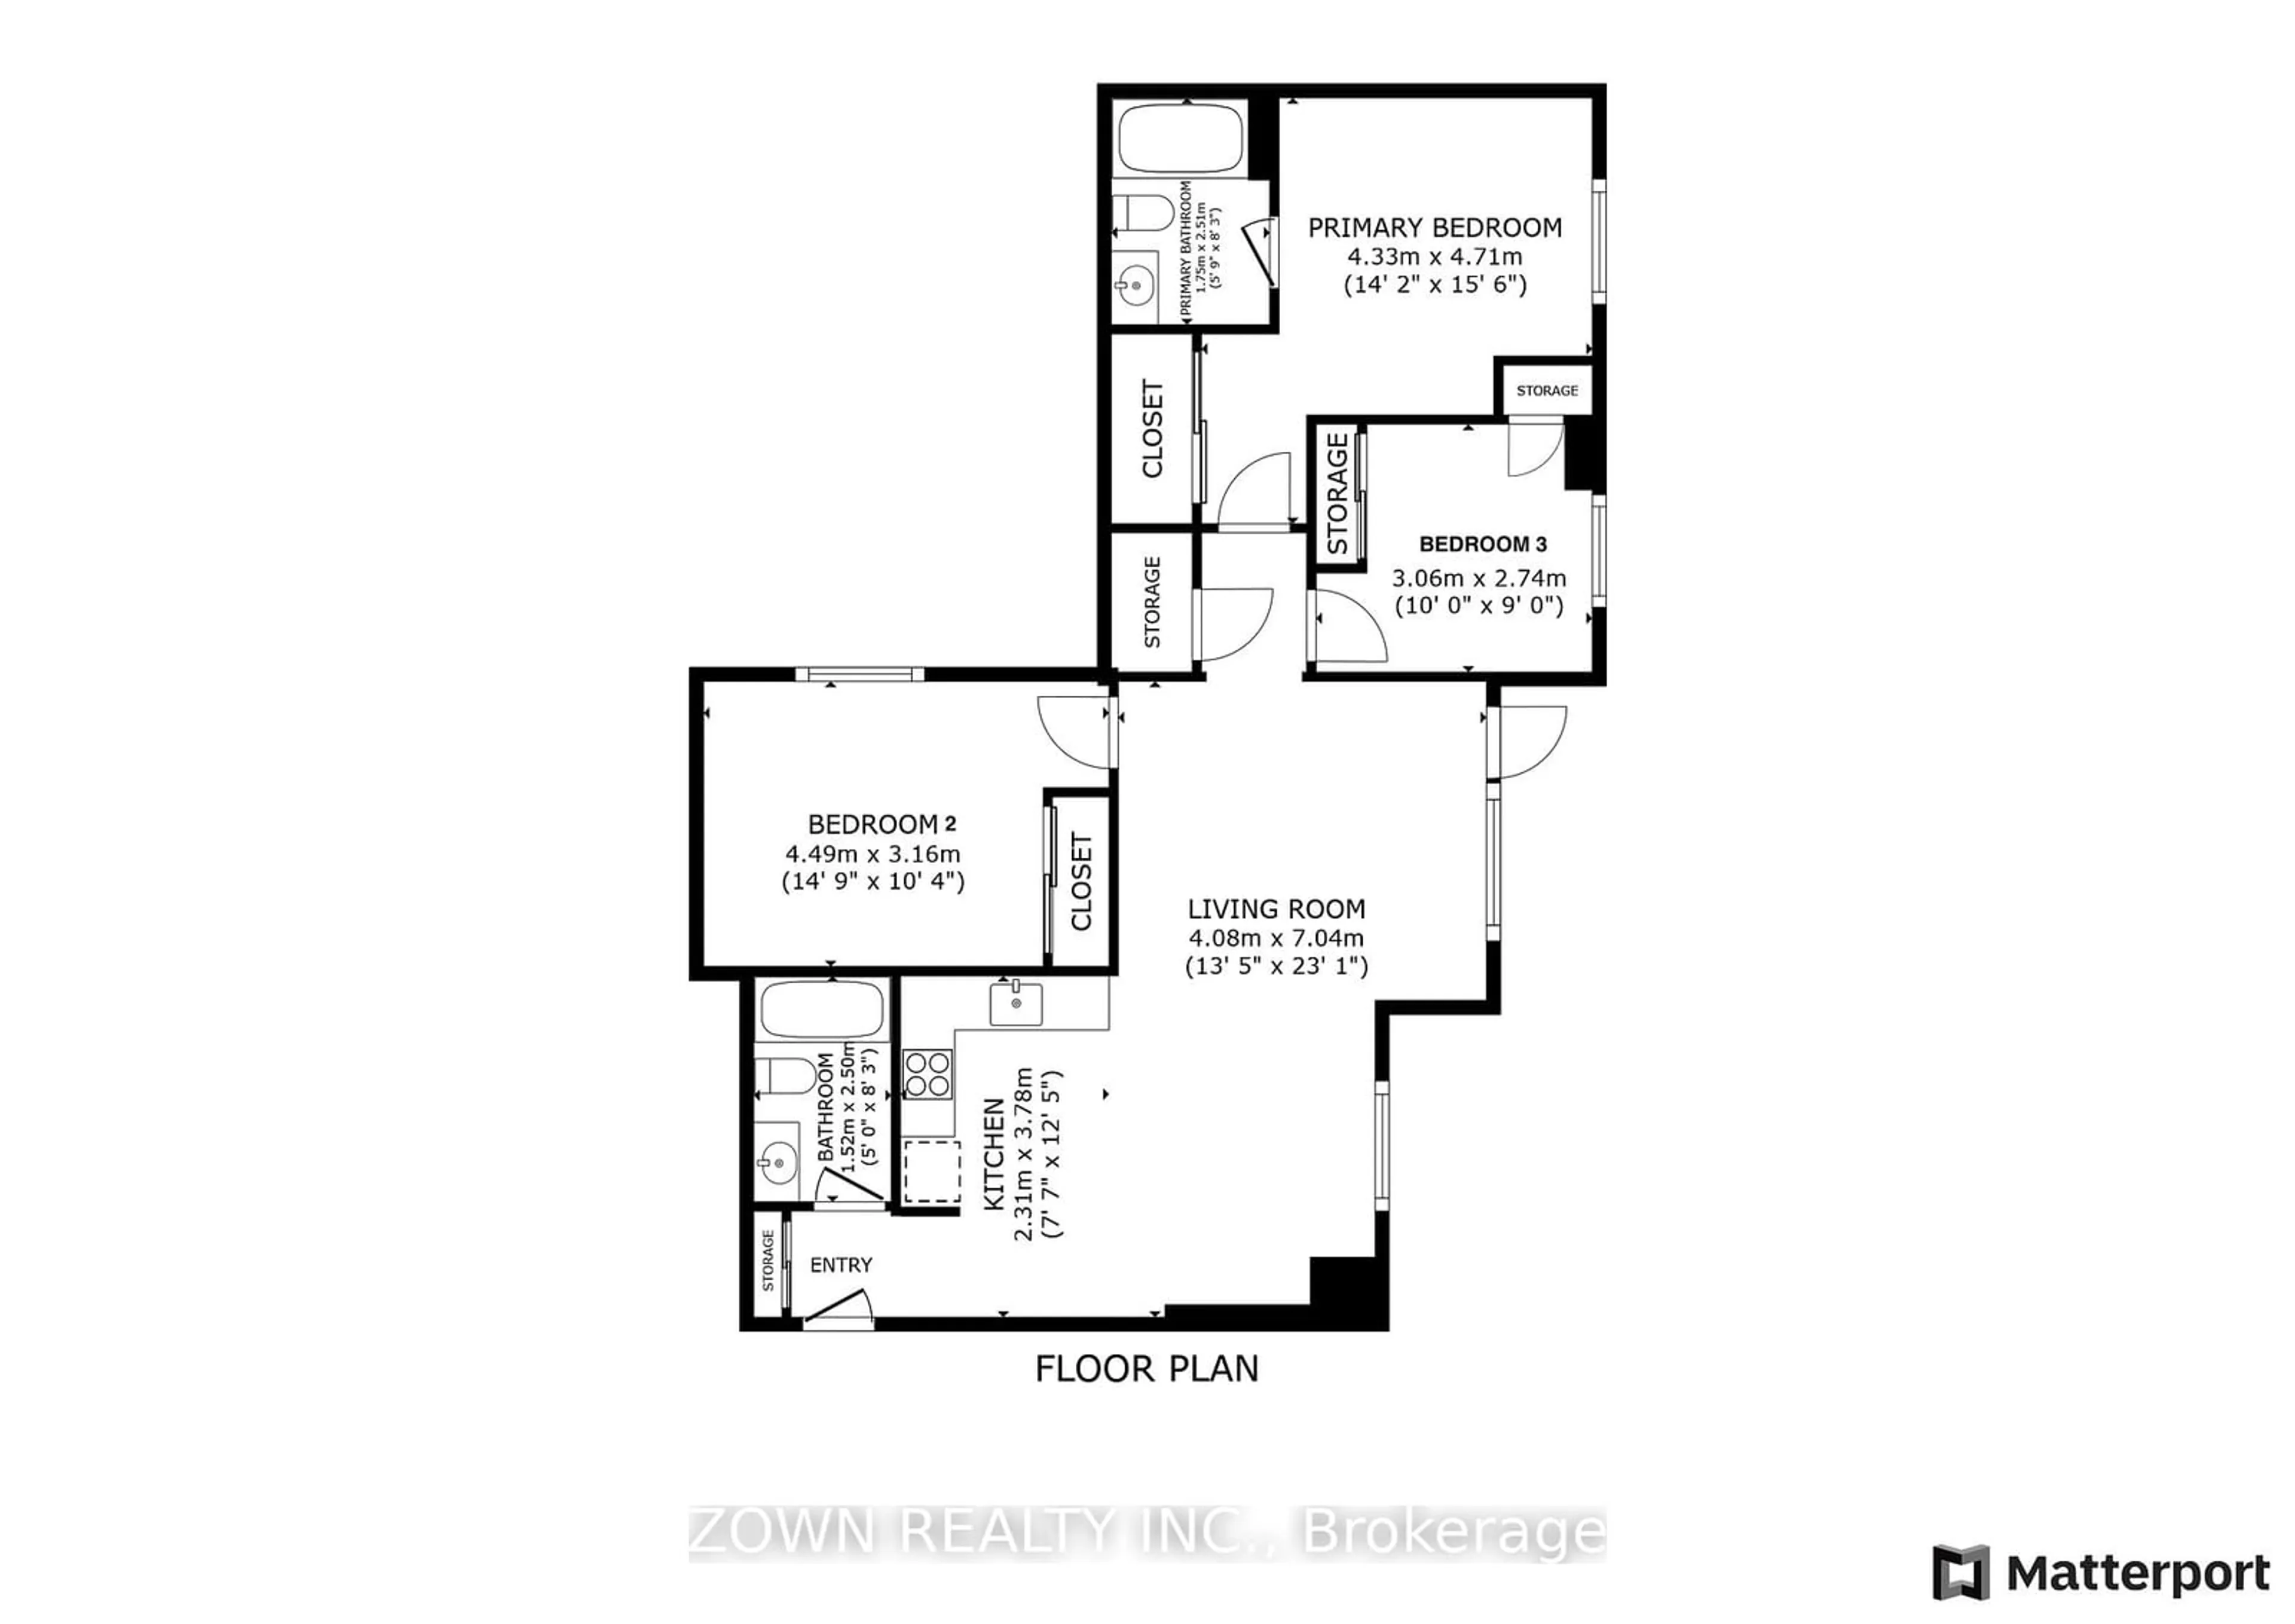 Floor plan for 55 Ann O'reilly Rd #124, Toronto Ontario M2J 0E1